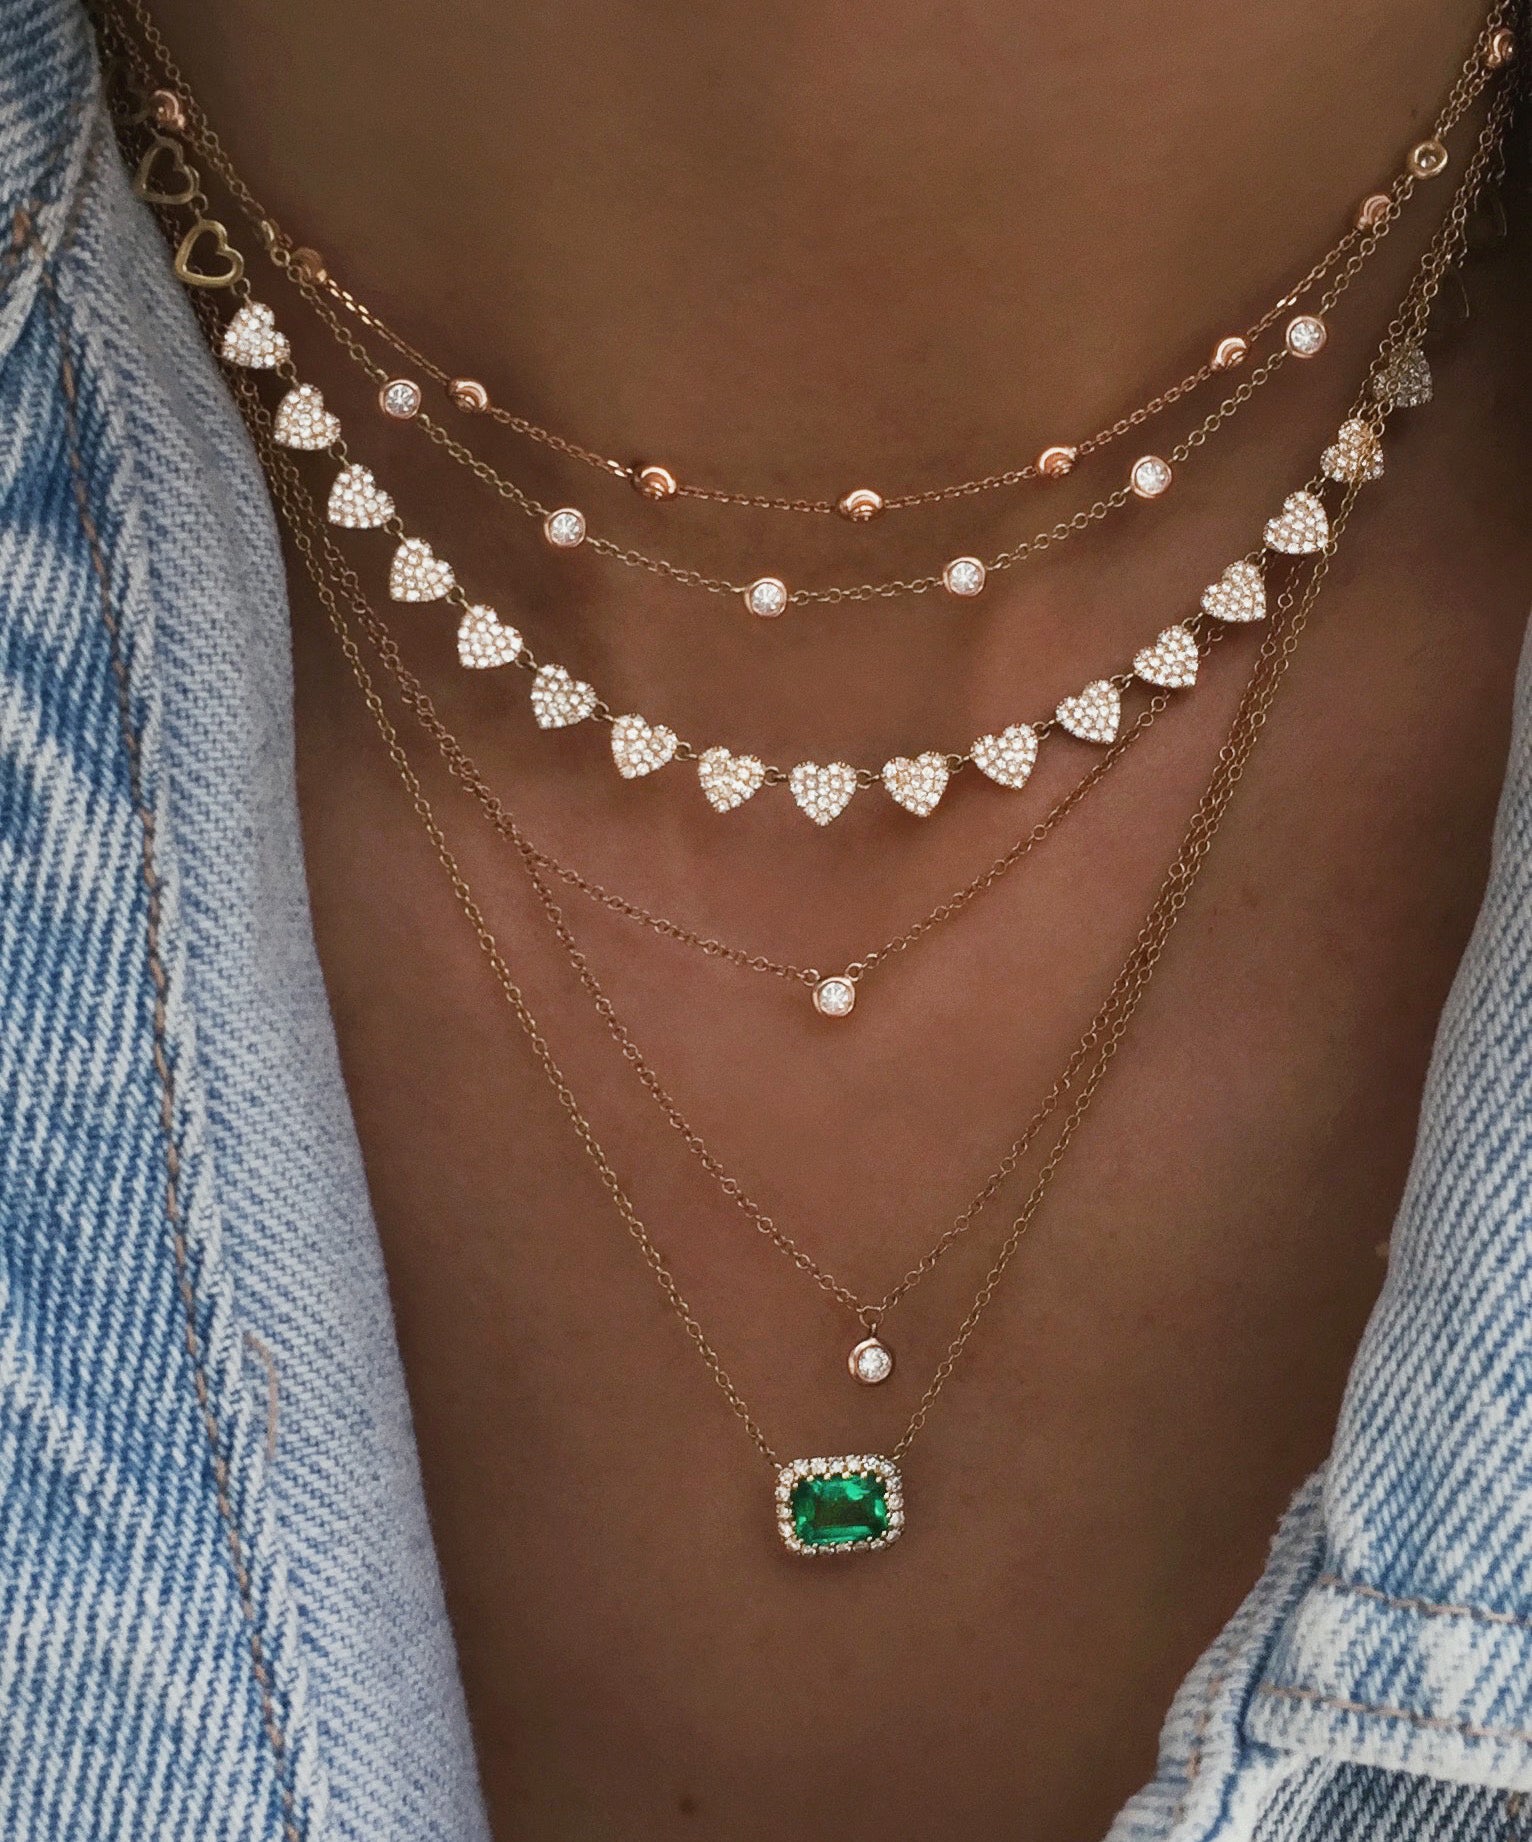 14kt gold double solitaire diamond necklace - Luna Skye